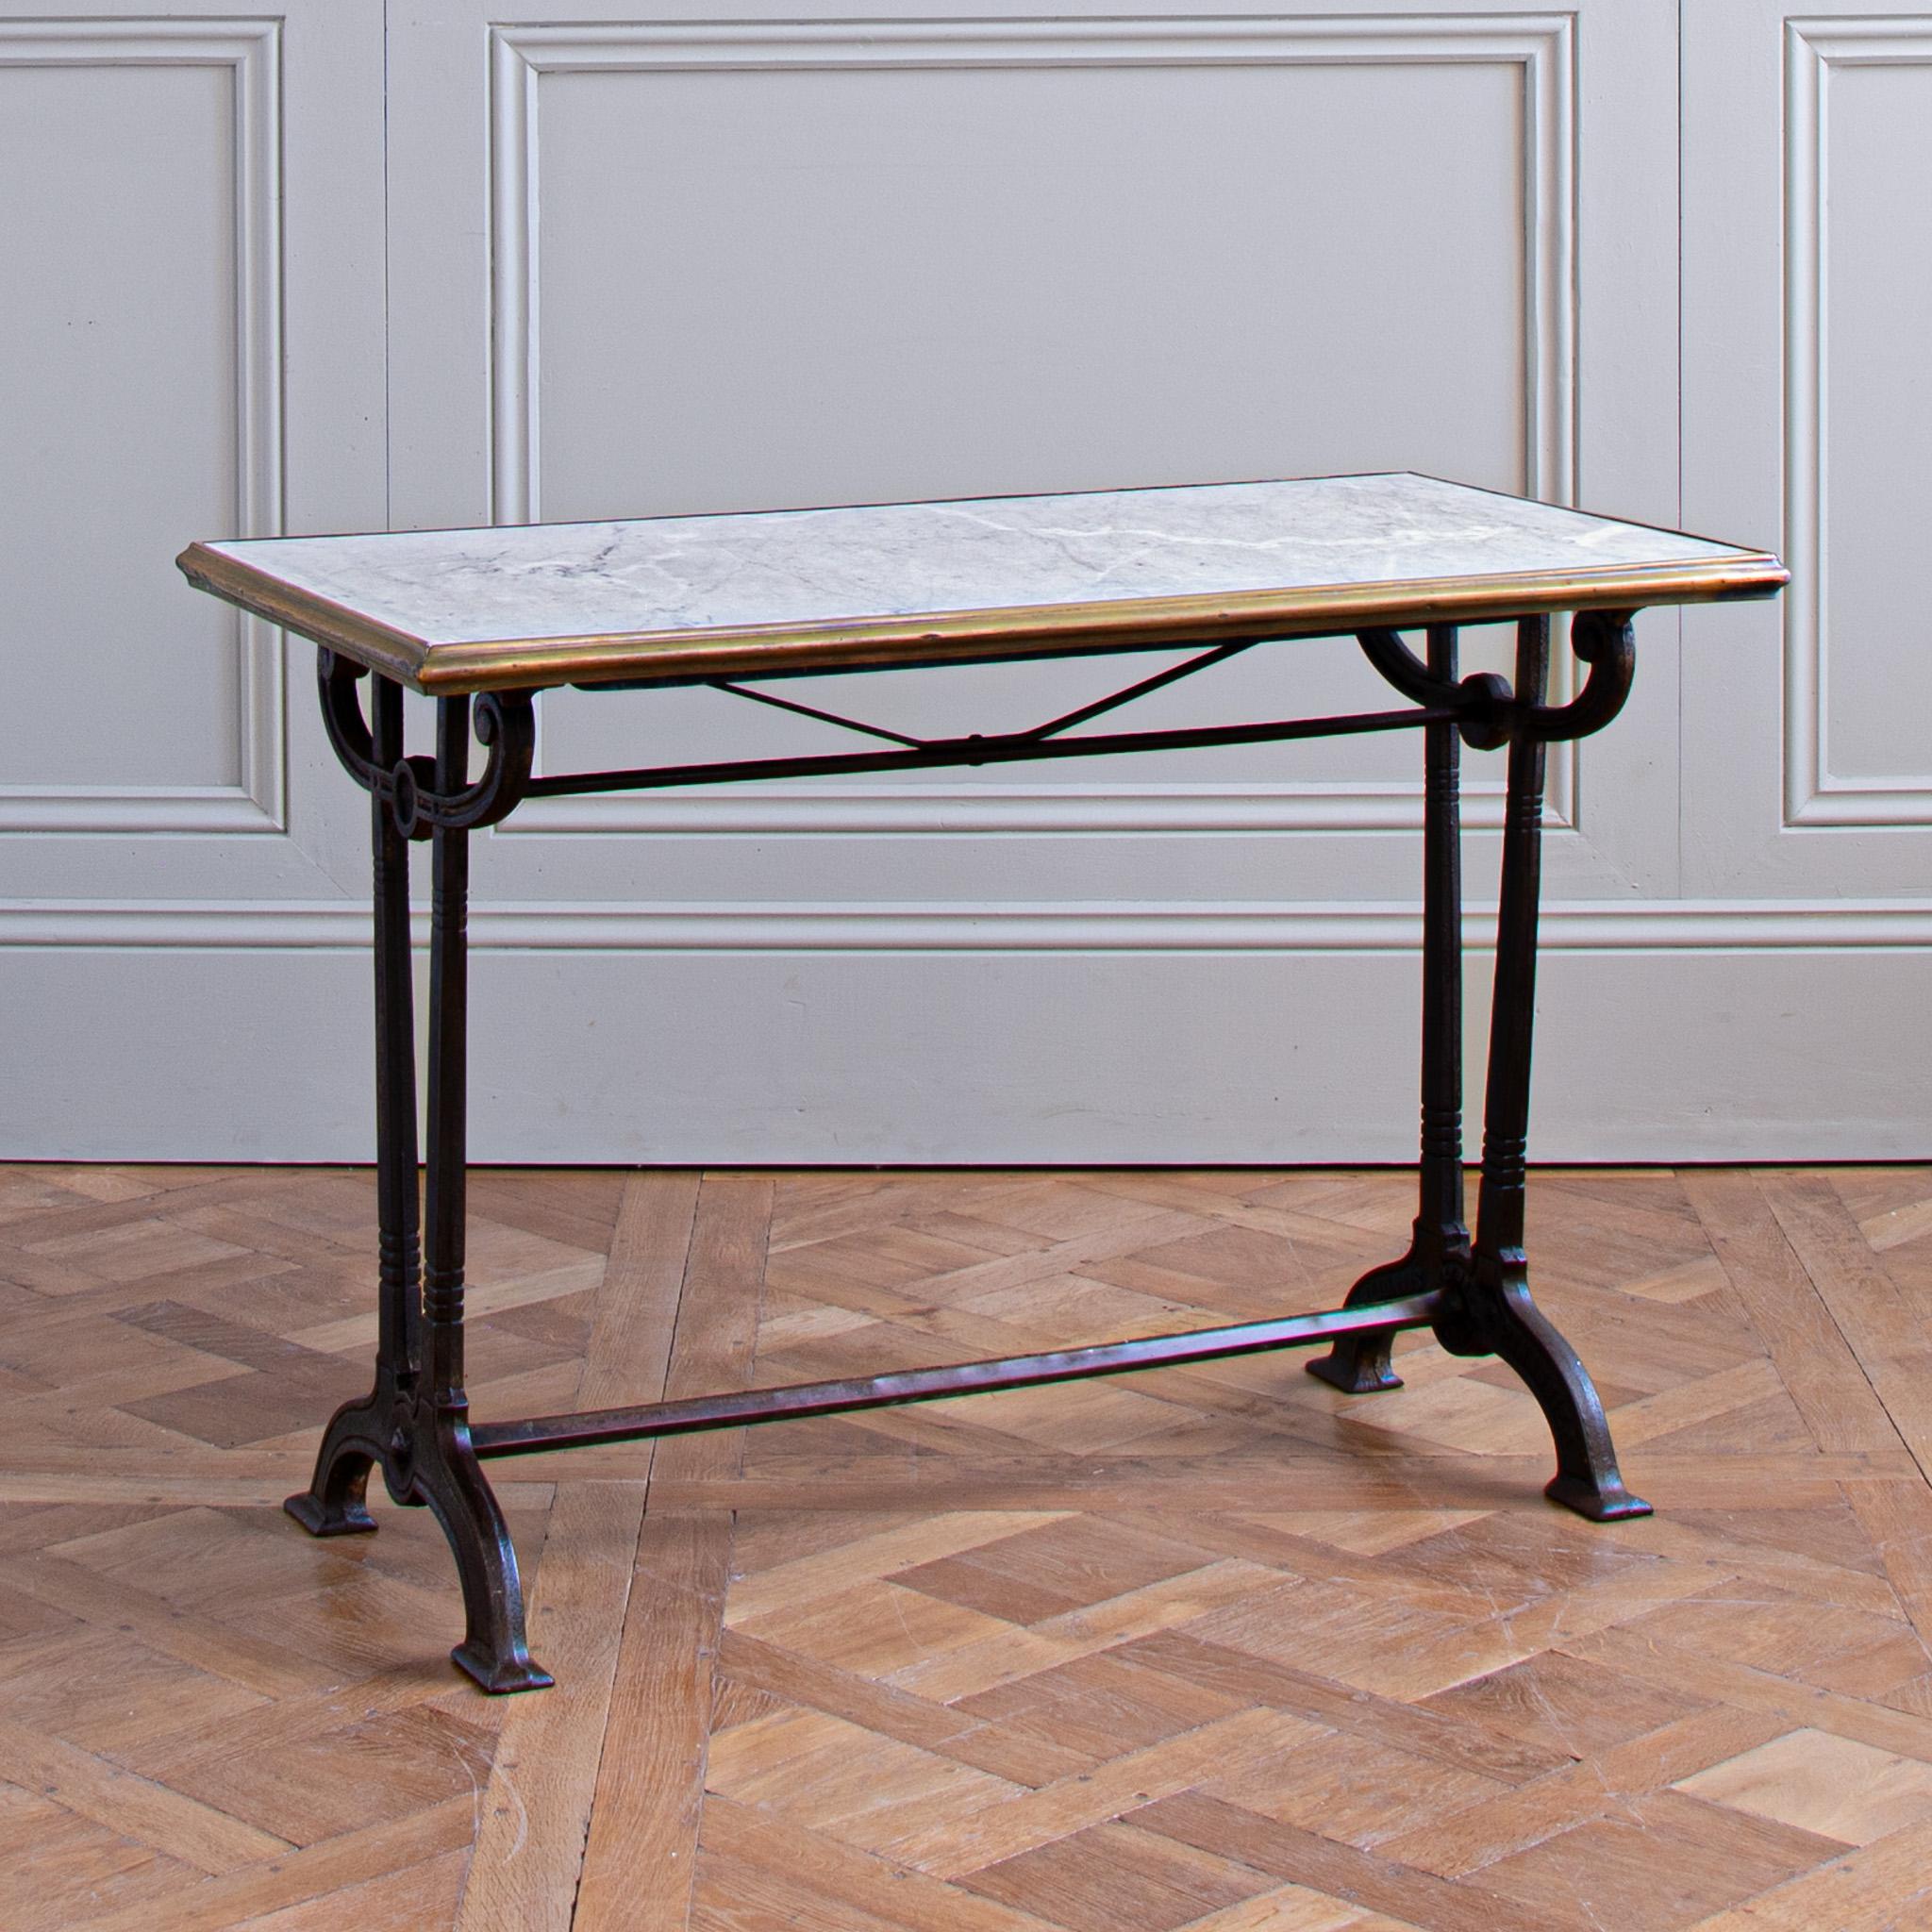 Art nouveau French Bistro Table Circa 1900 by Charlionais & Panassier 1